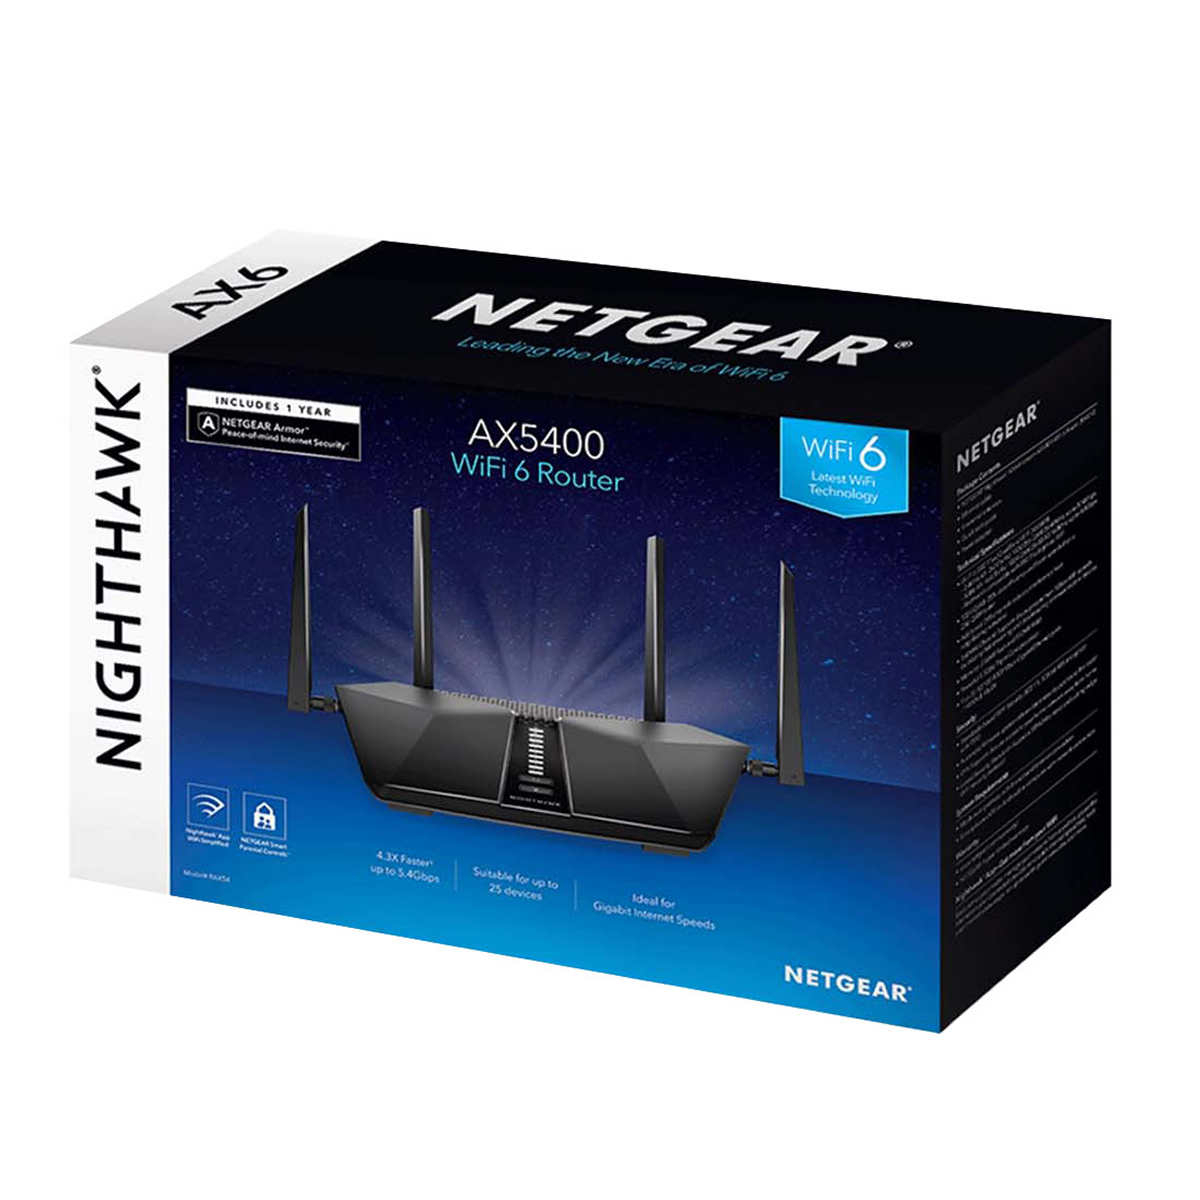 NETGEAR – Nighthawk AX5400 WiFi 6 Router, One Year Advanced Cyber Security